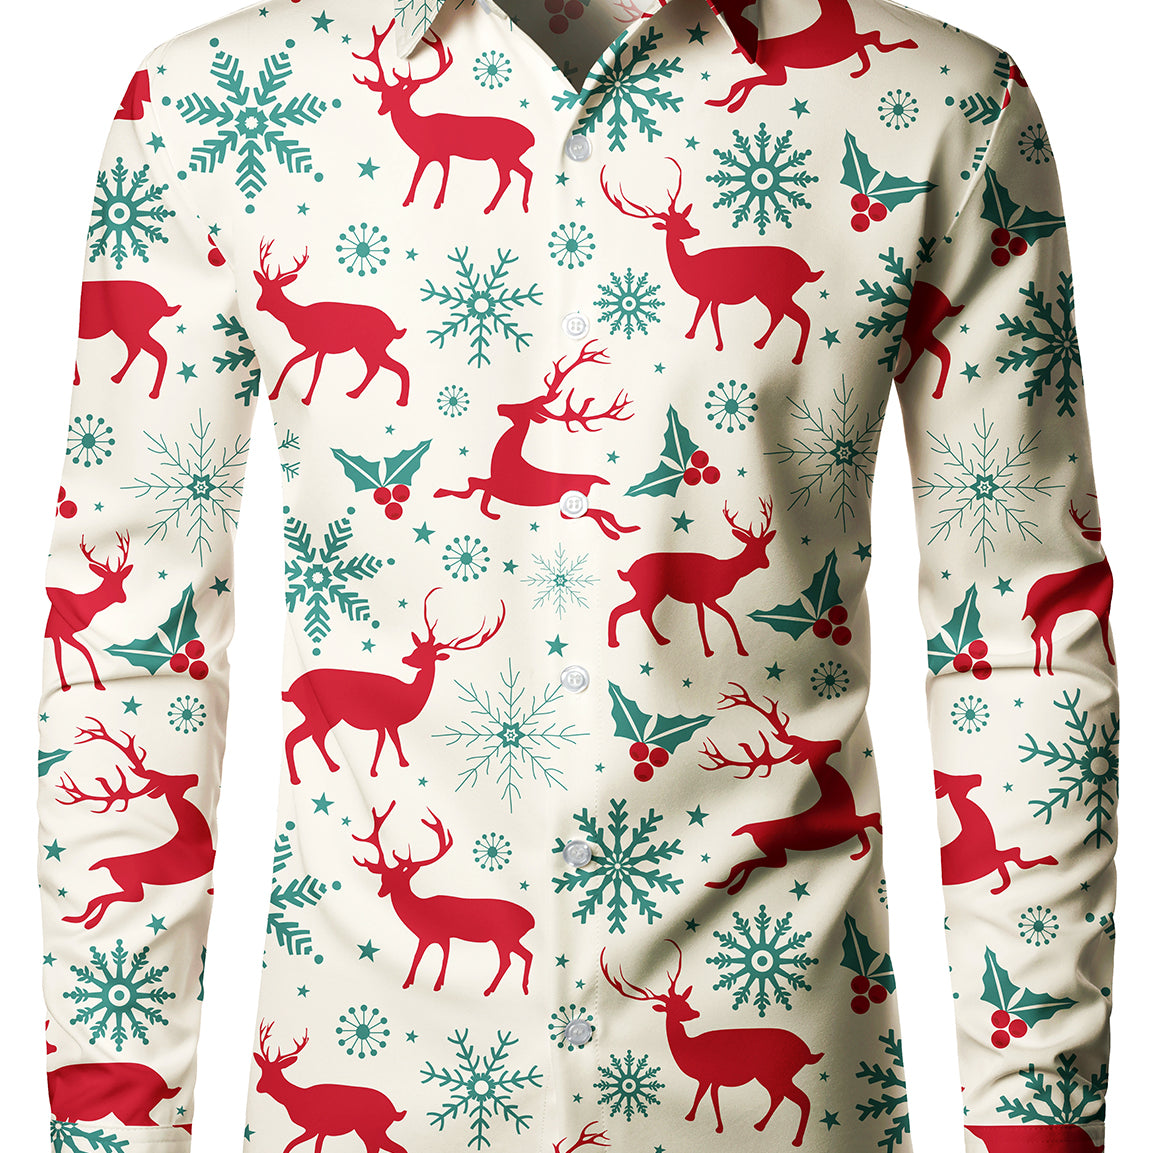 Men's Christmas Elk Print Snowflake Xmas Holiday Button Up Long Sleeve Shirt